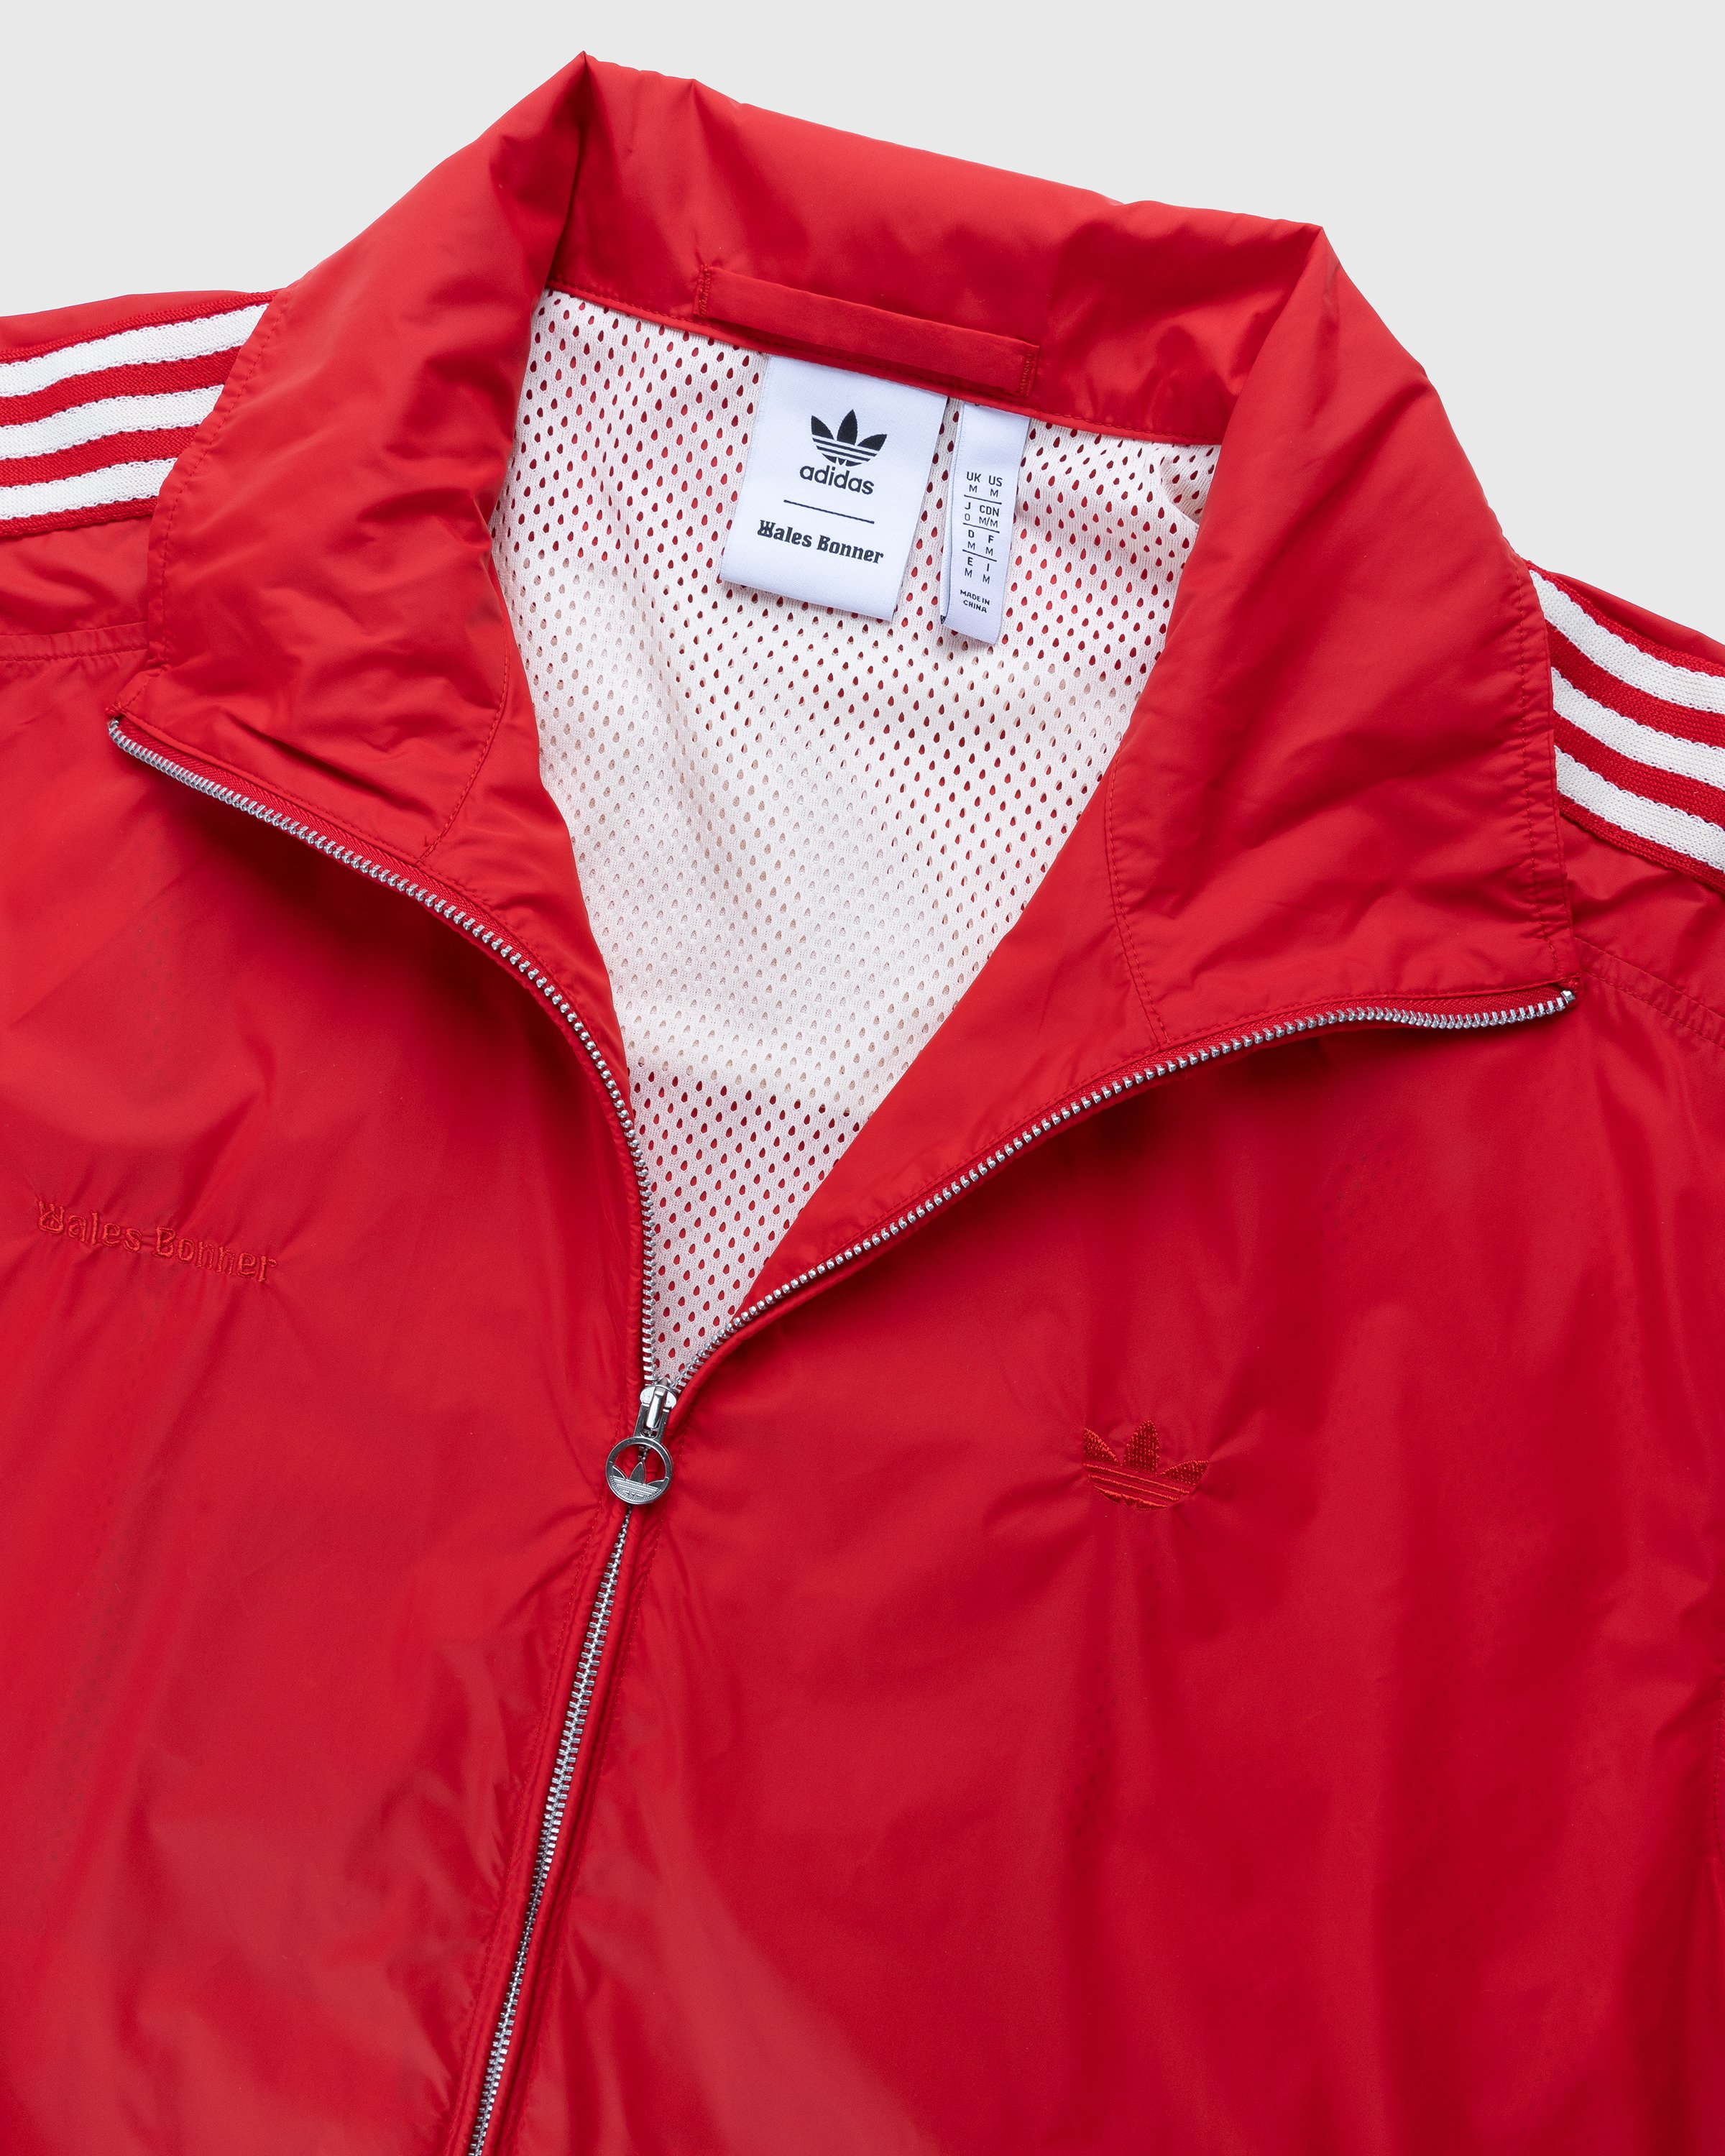 Adidas x Wales Bonner – WB Light Jacket Scarlet | Highsnobiety Shop